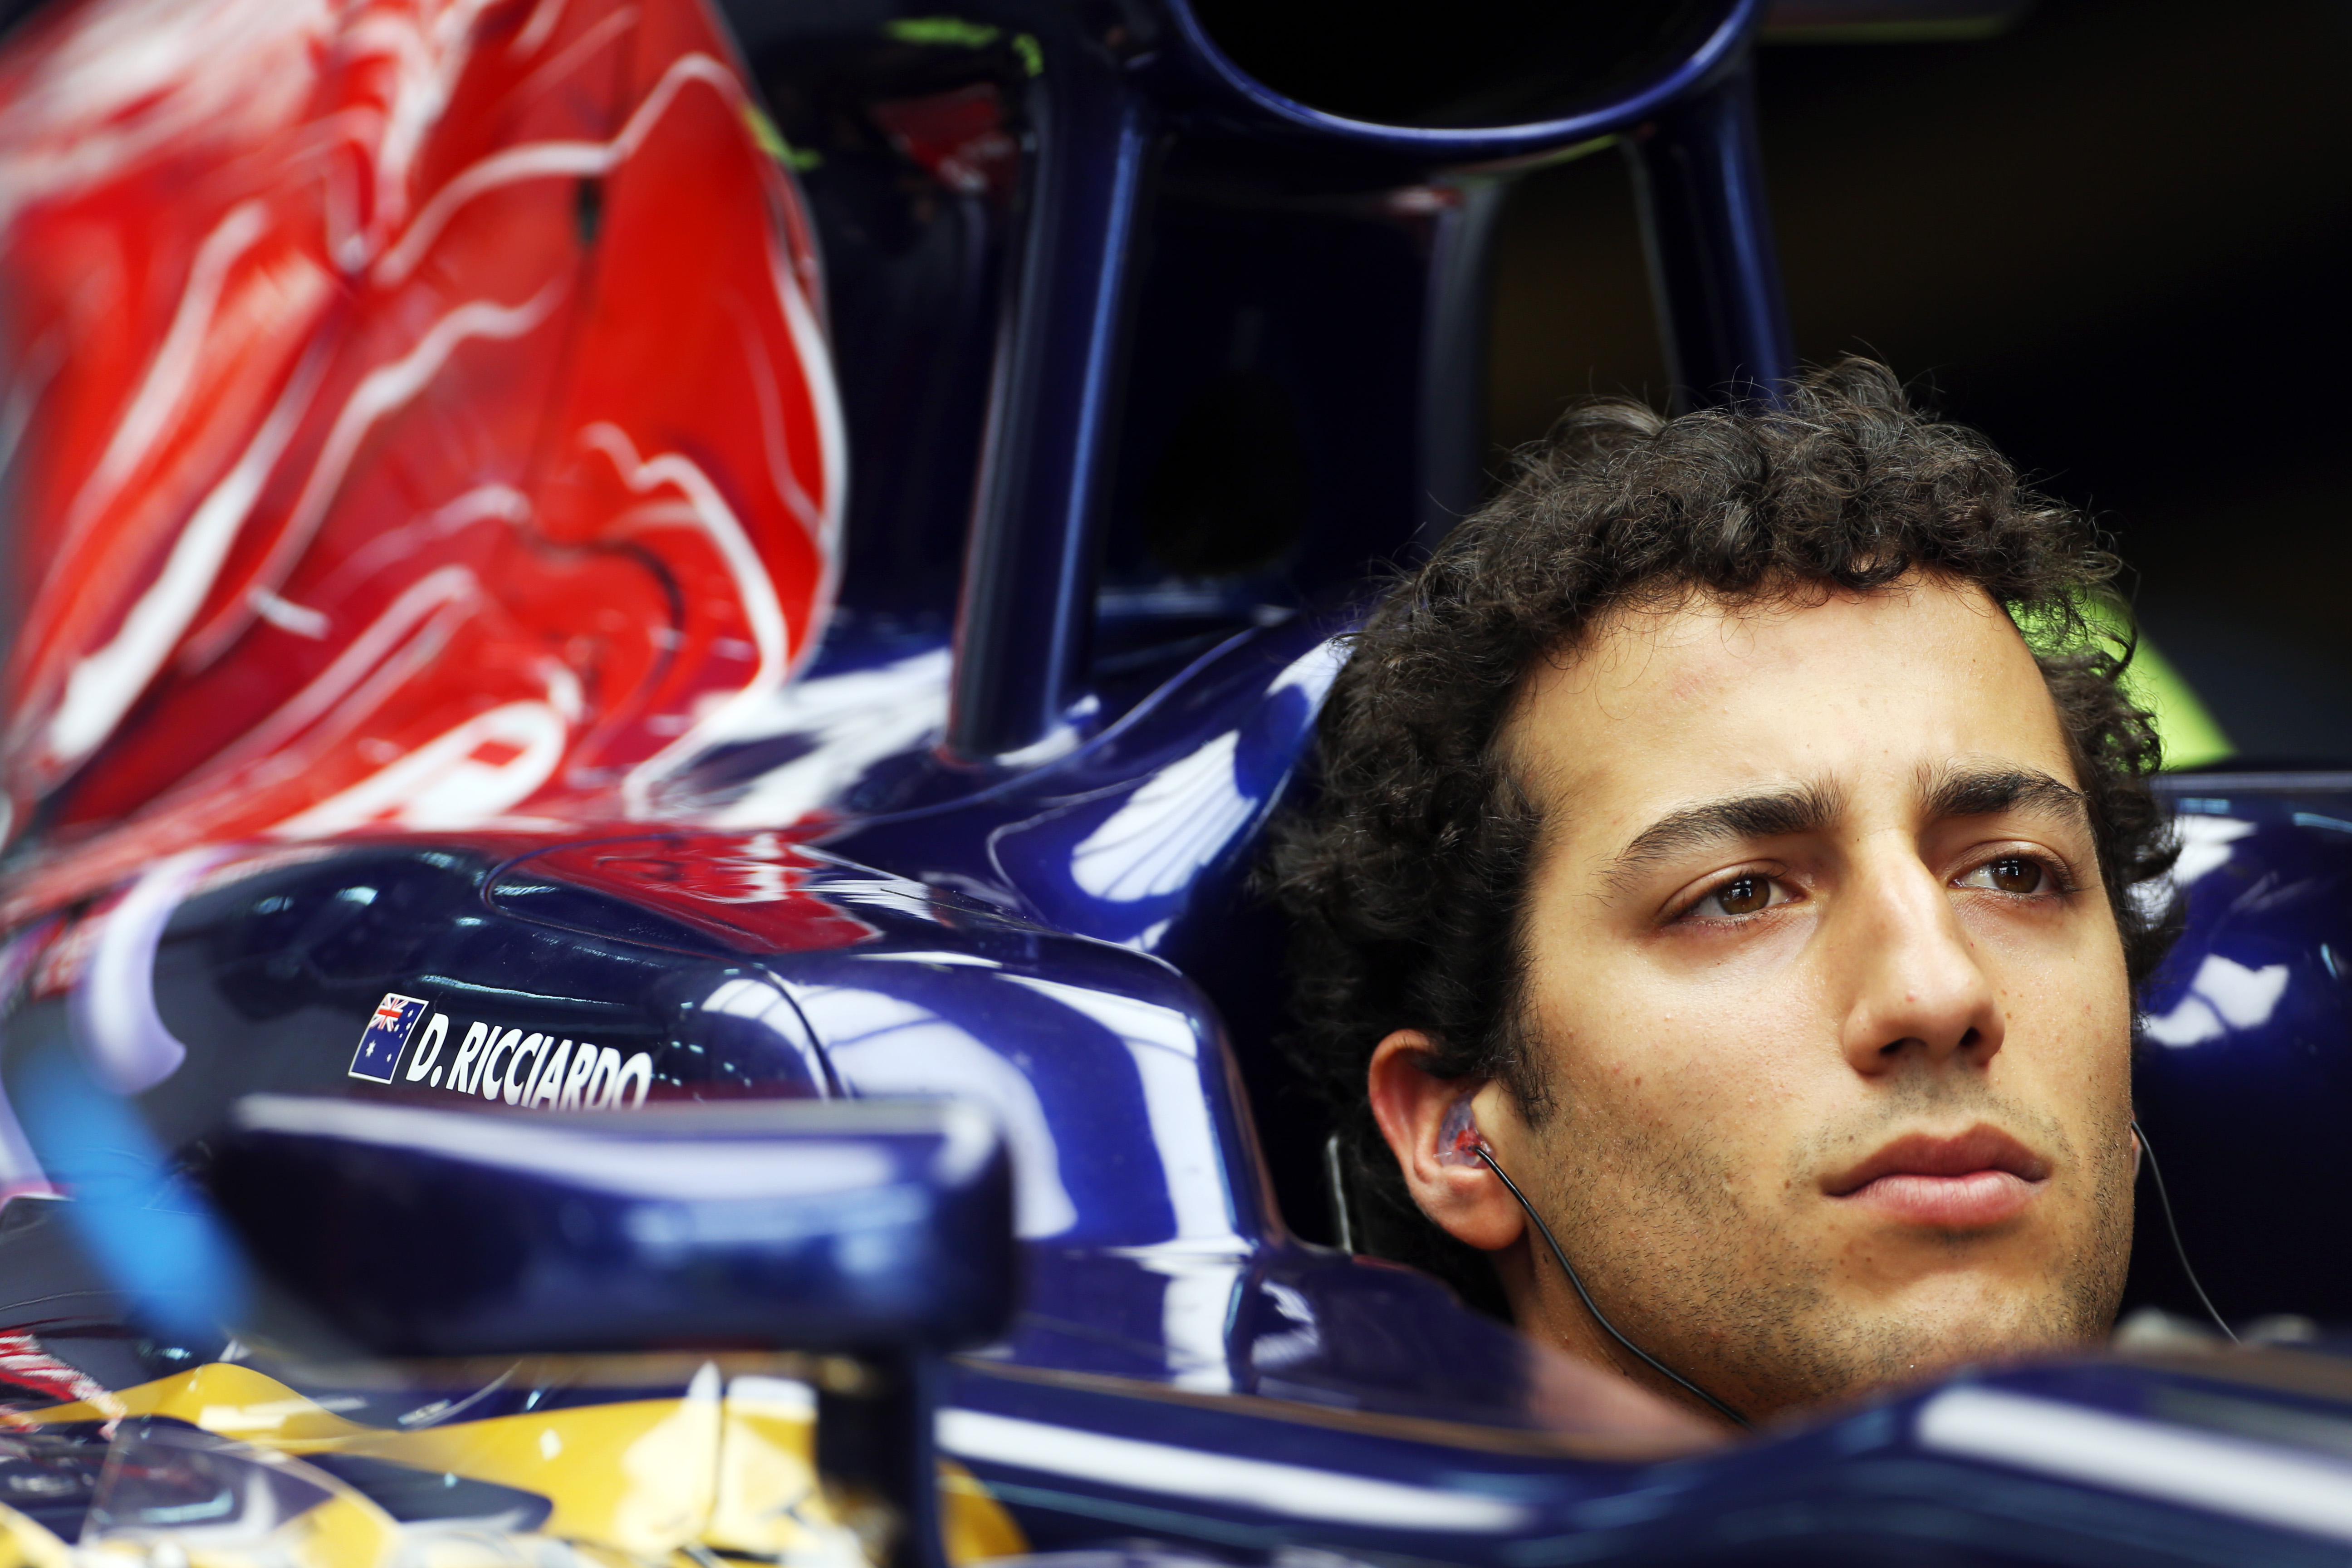 Ricciardo: ‘Zevende plaats China kwam ons toe’